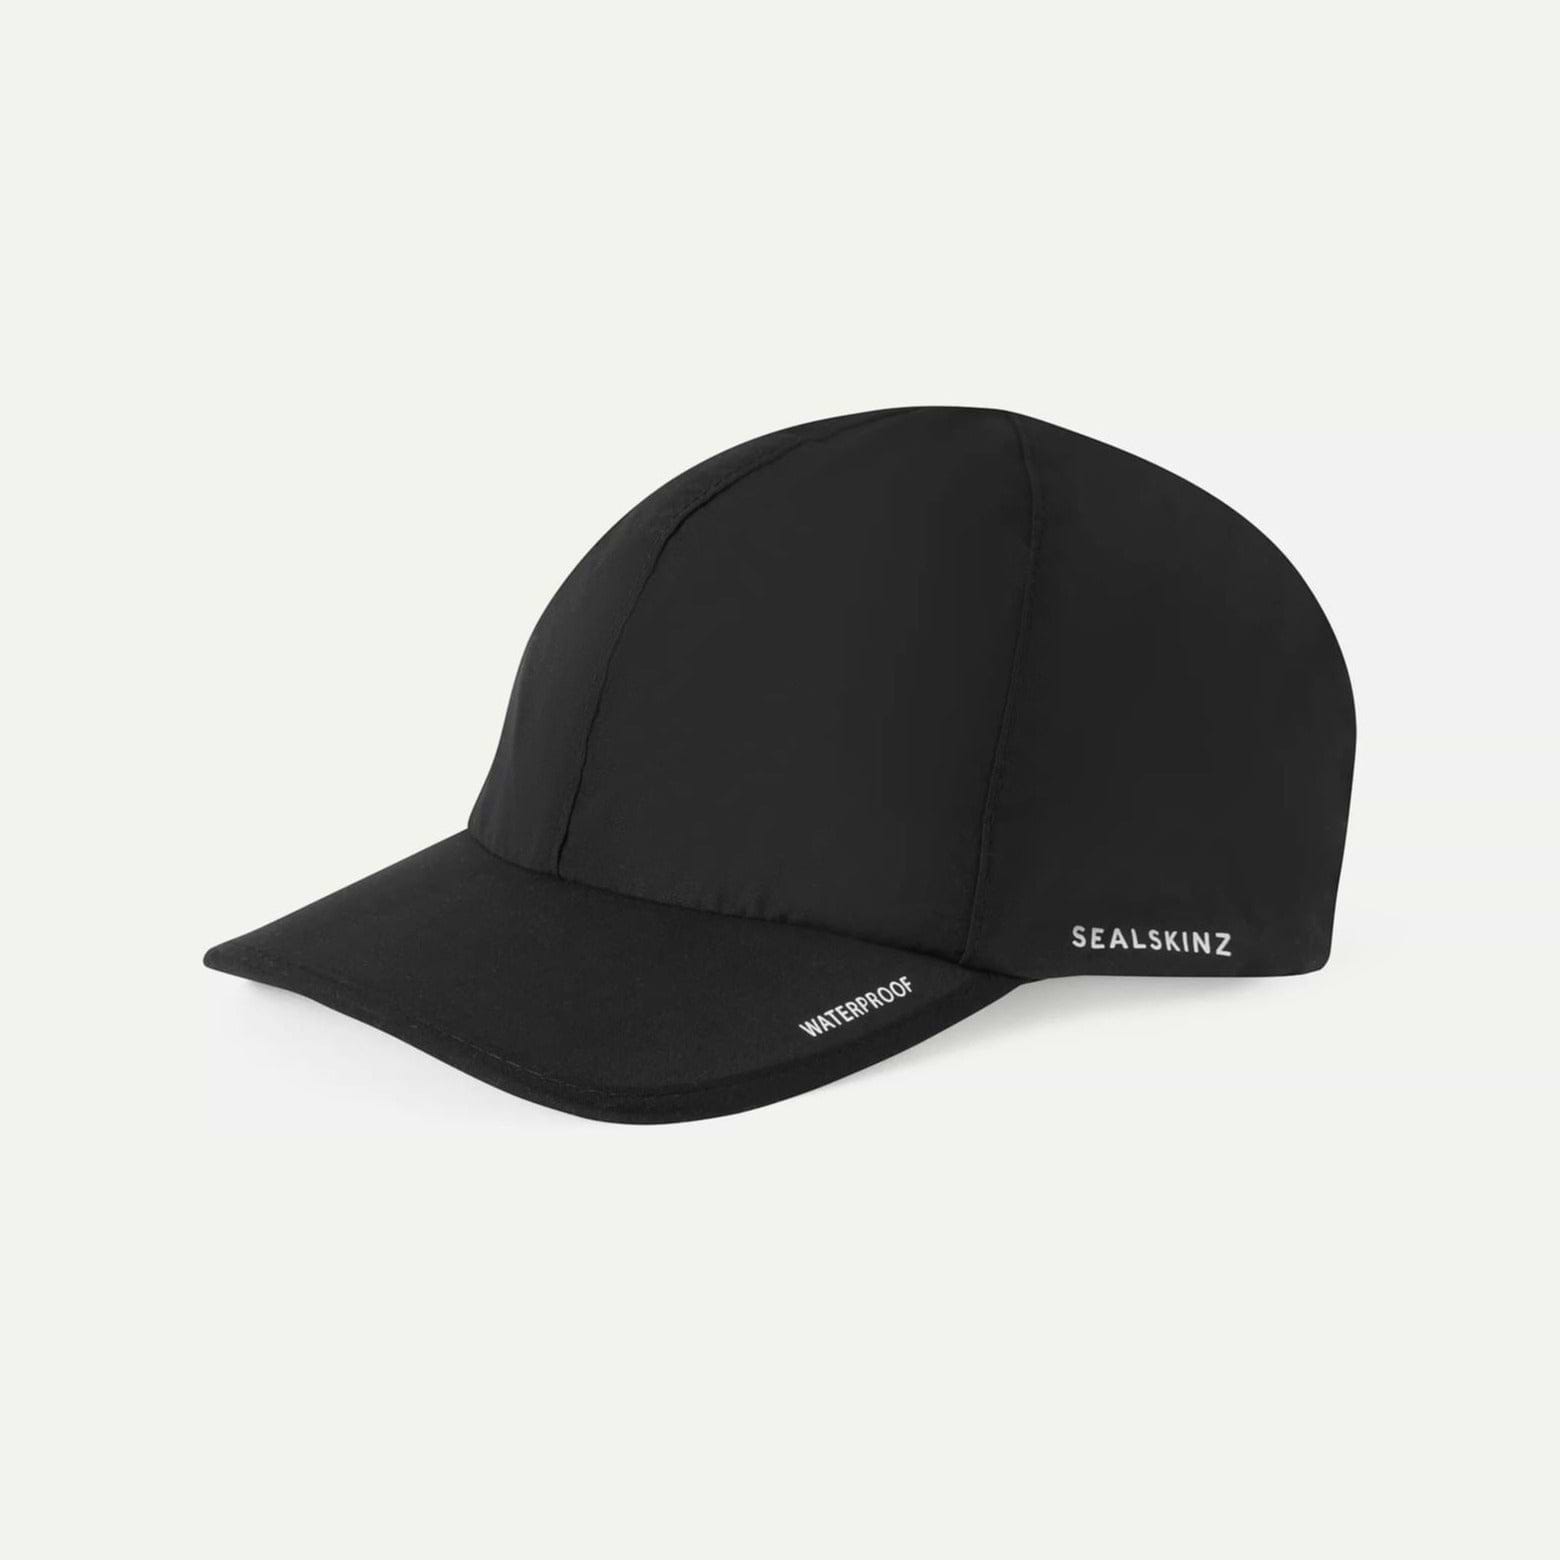 100% Waterproof, Windproof & Breathable Hats